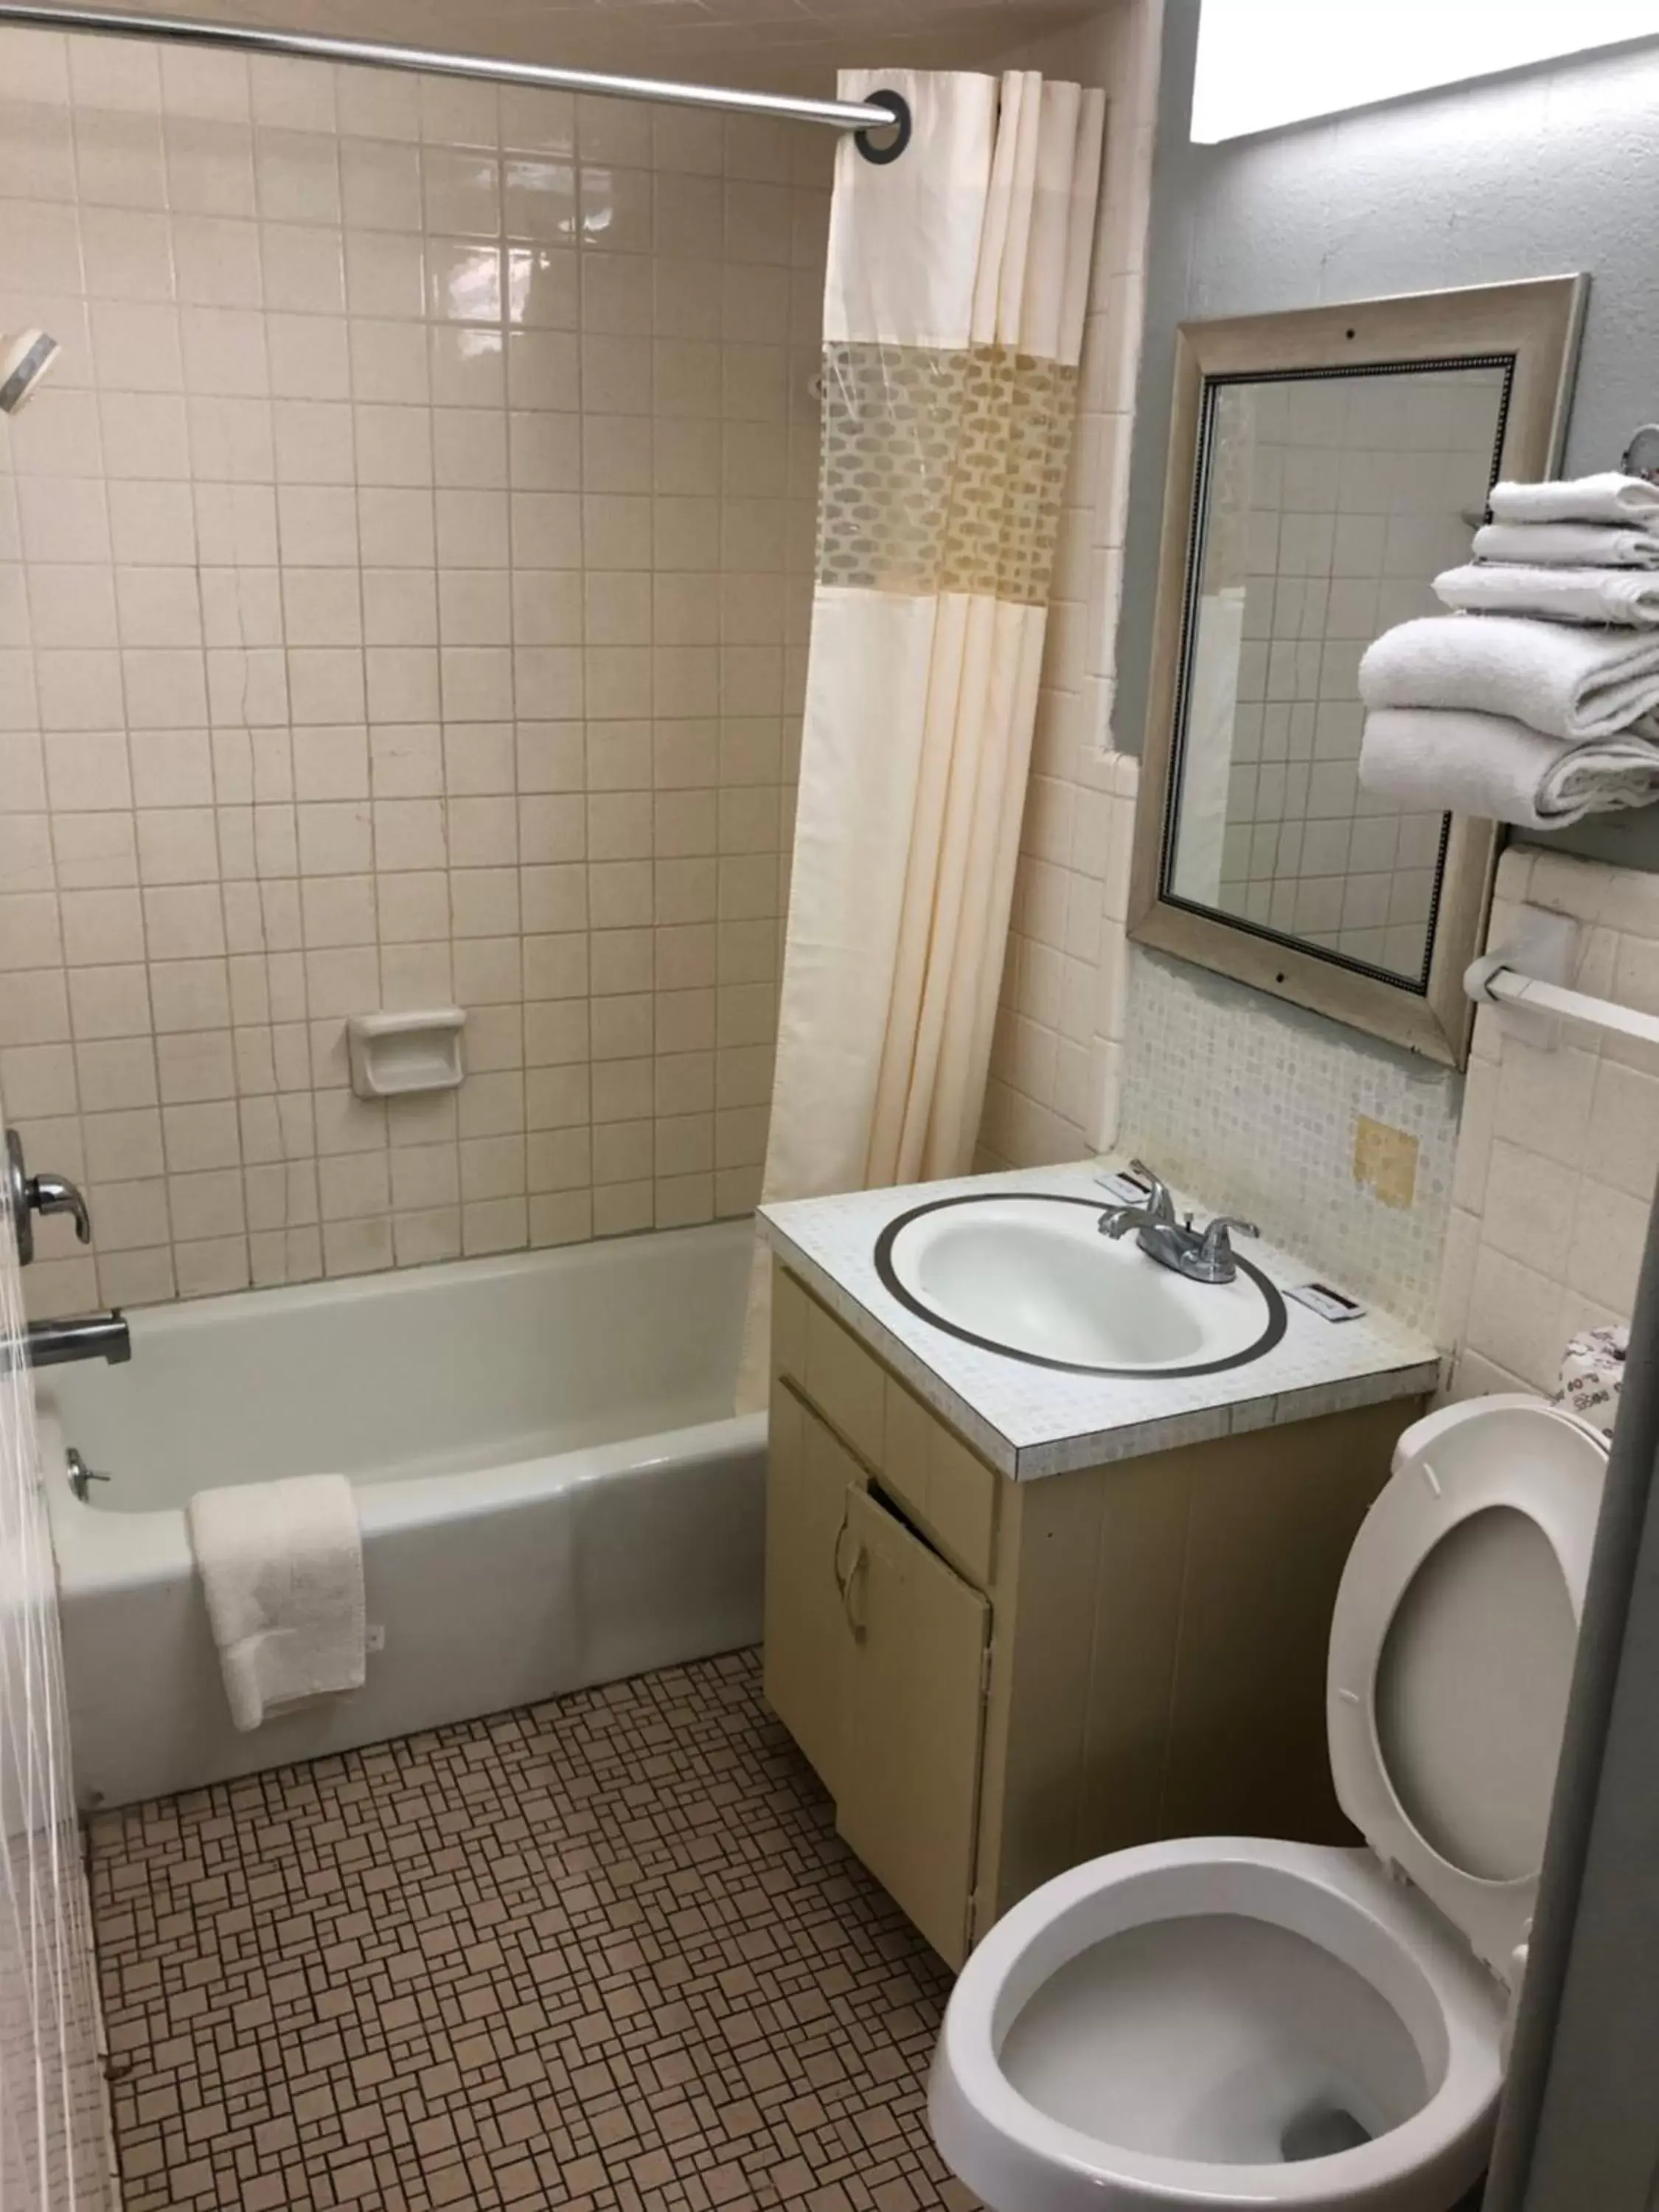 Bathroom in Budget inn